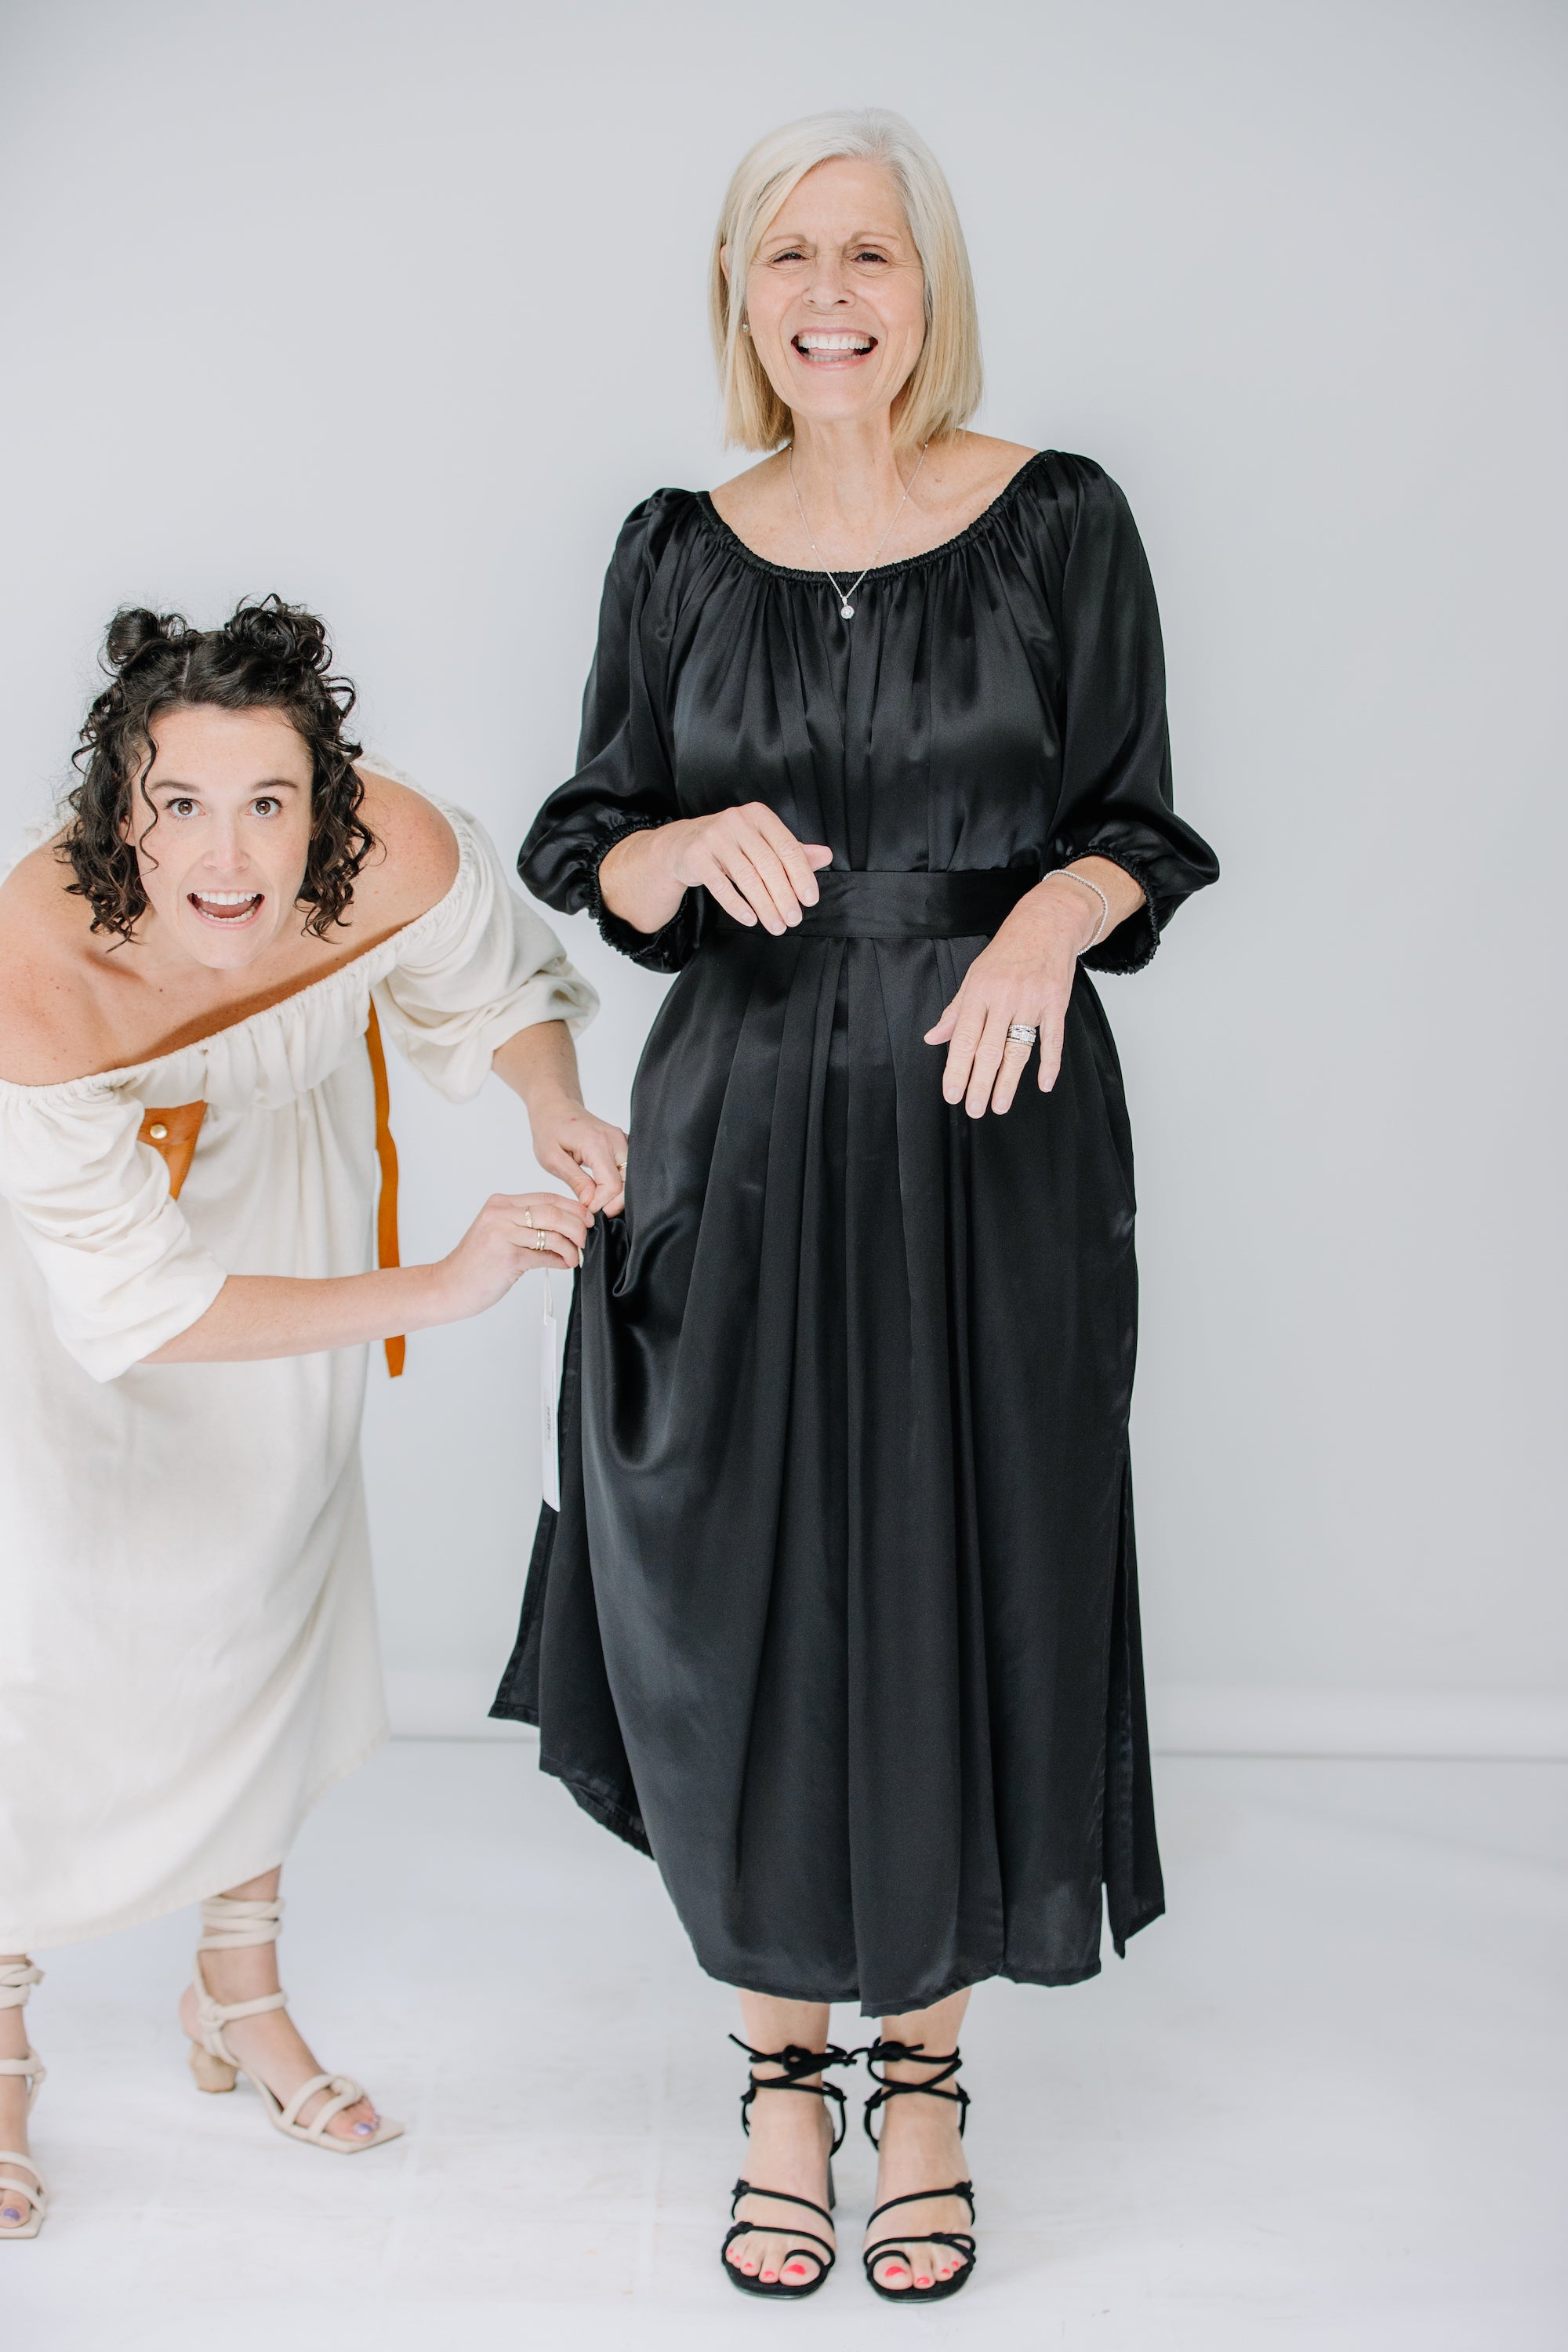 jules and lacey wear the cassatt dress in raw silk in natural, and venita wears the cassat dress in black silk charmeuse. dresses by miranda bennett studio